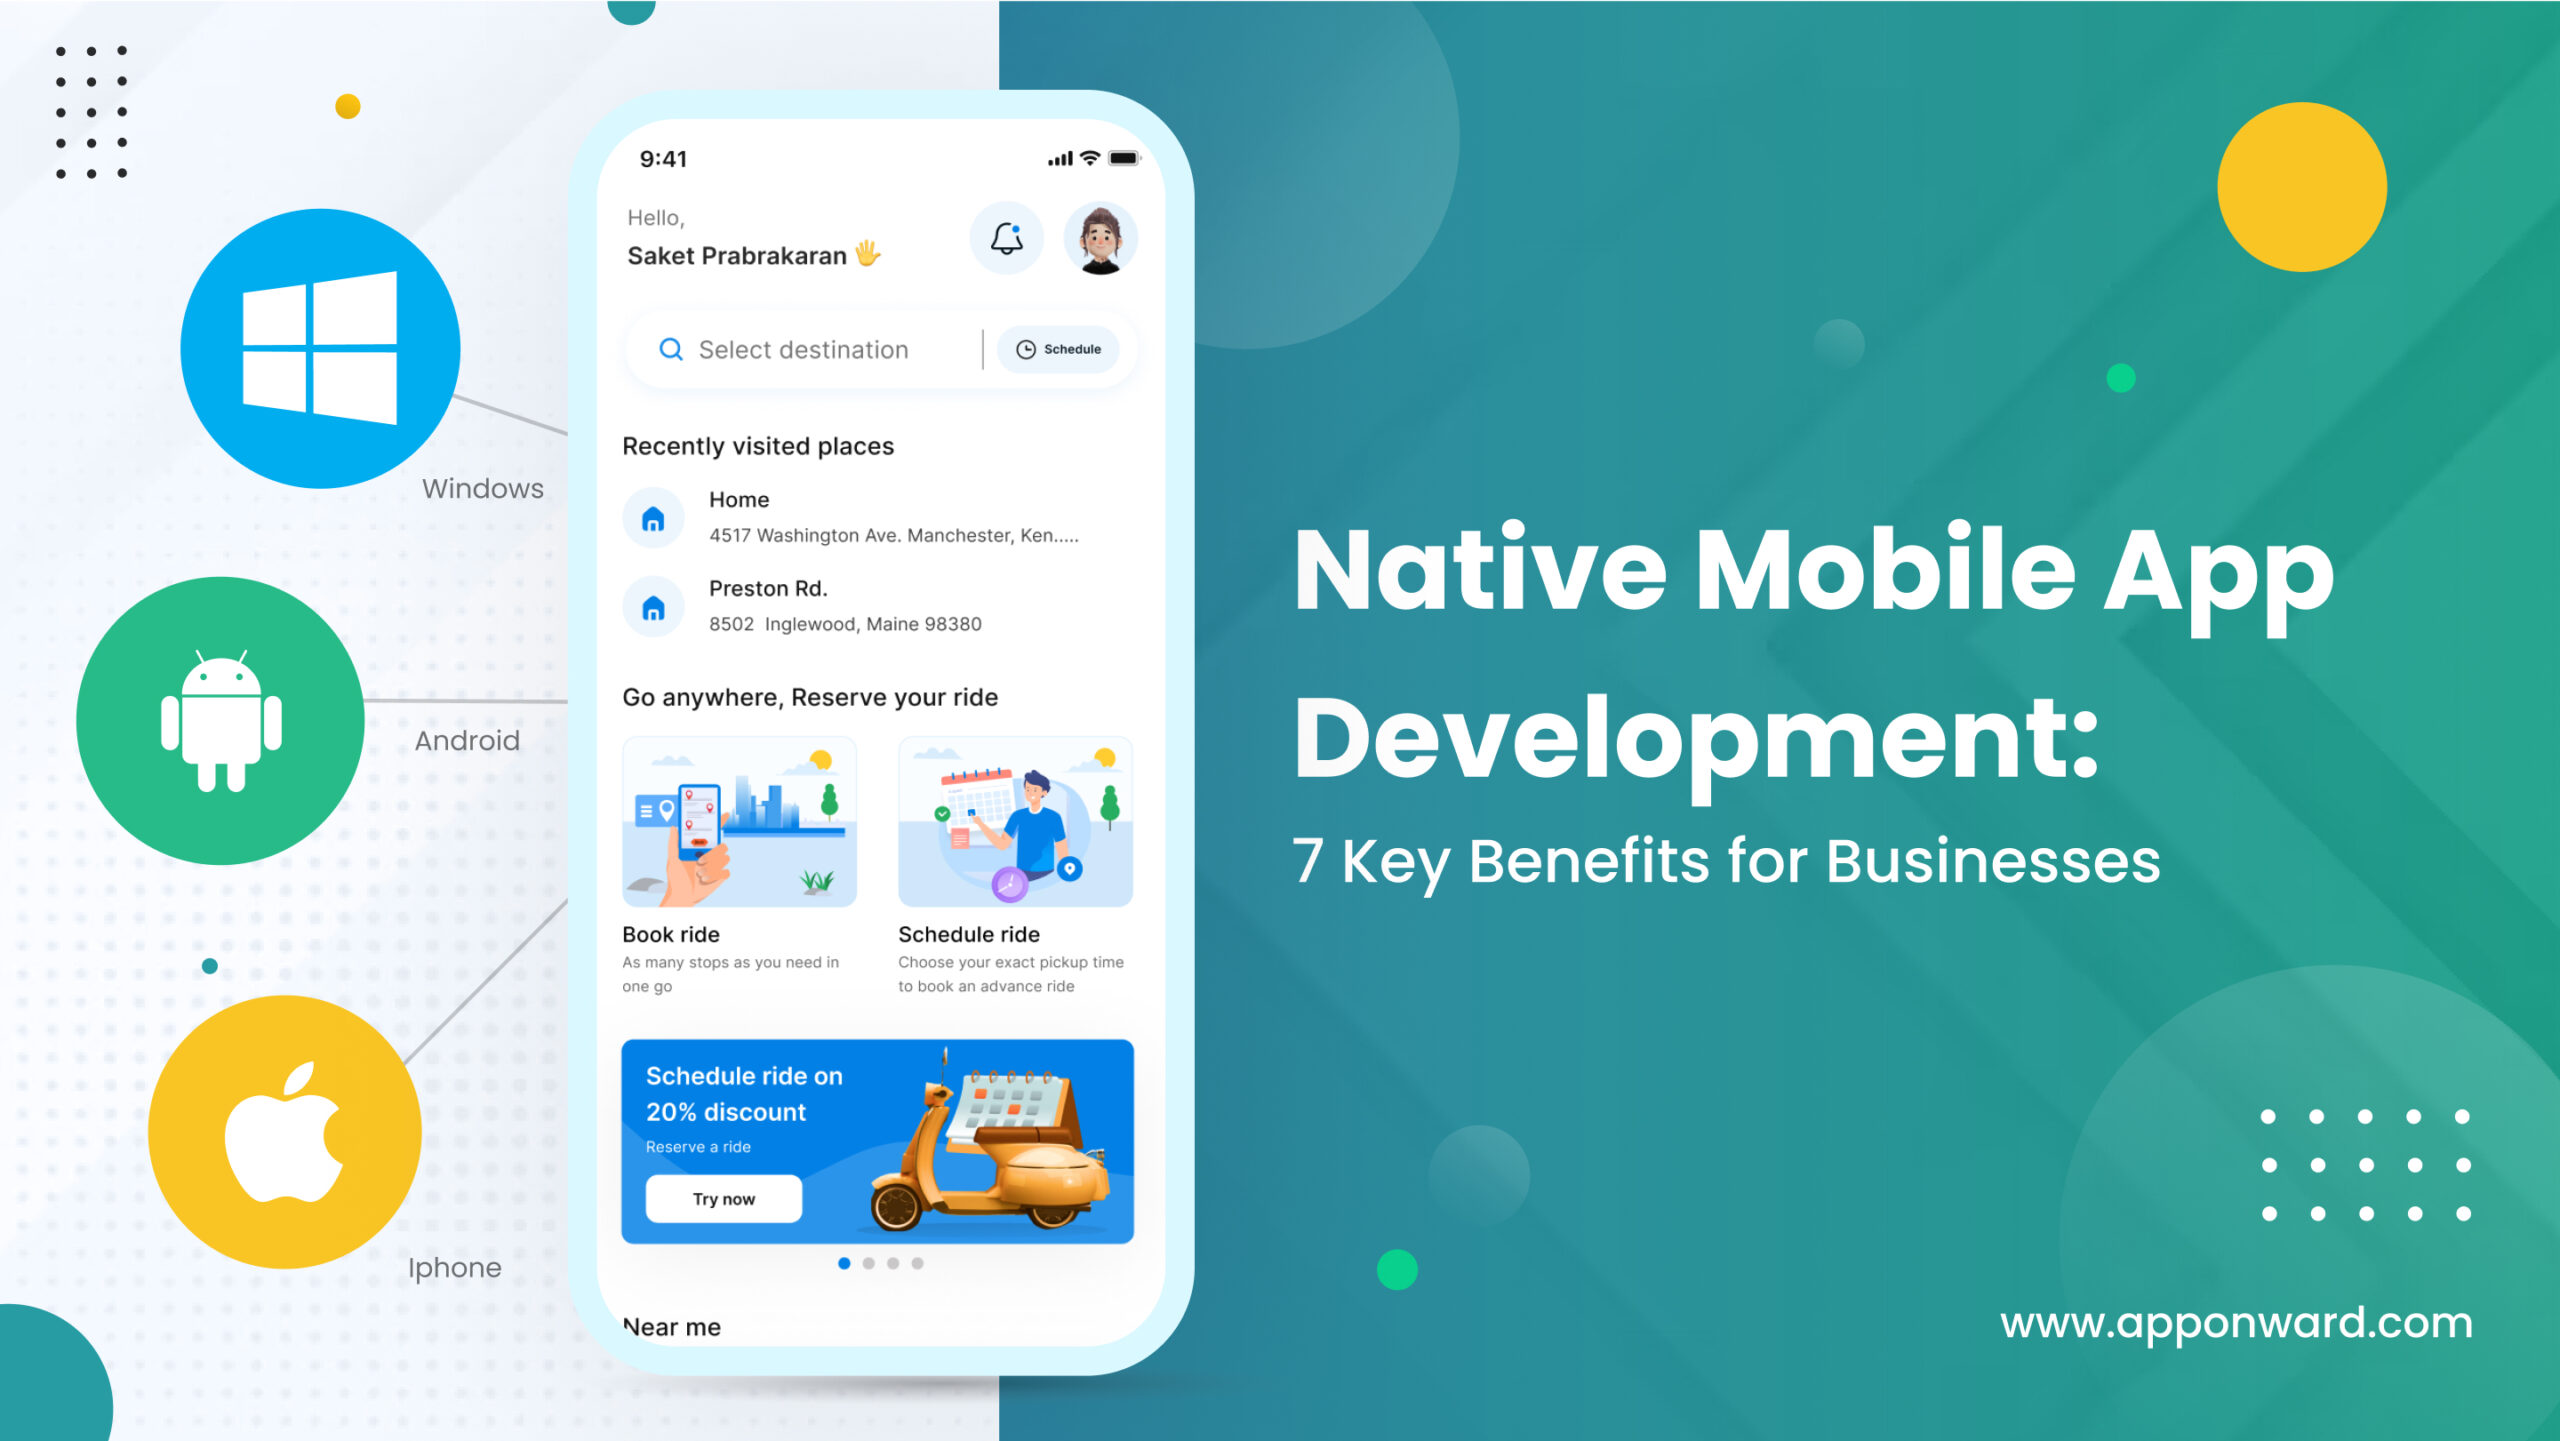 Native Mobile App Development: 7 Key Benefits for Businesses